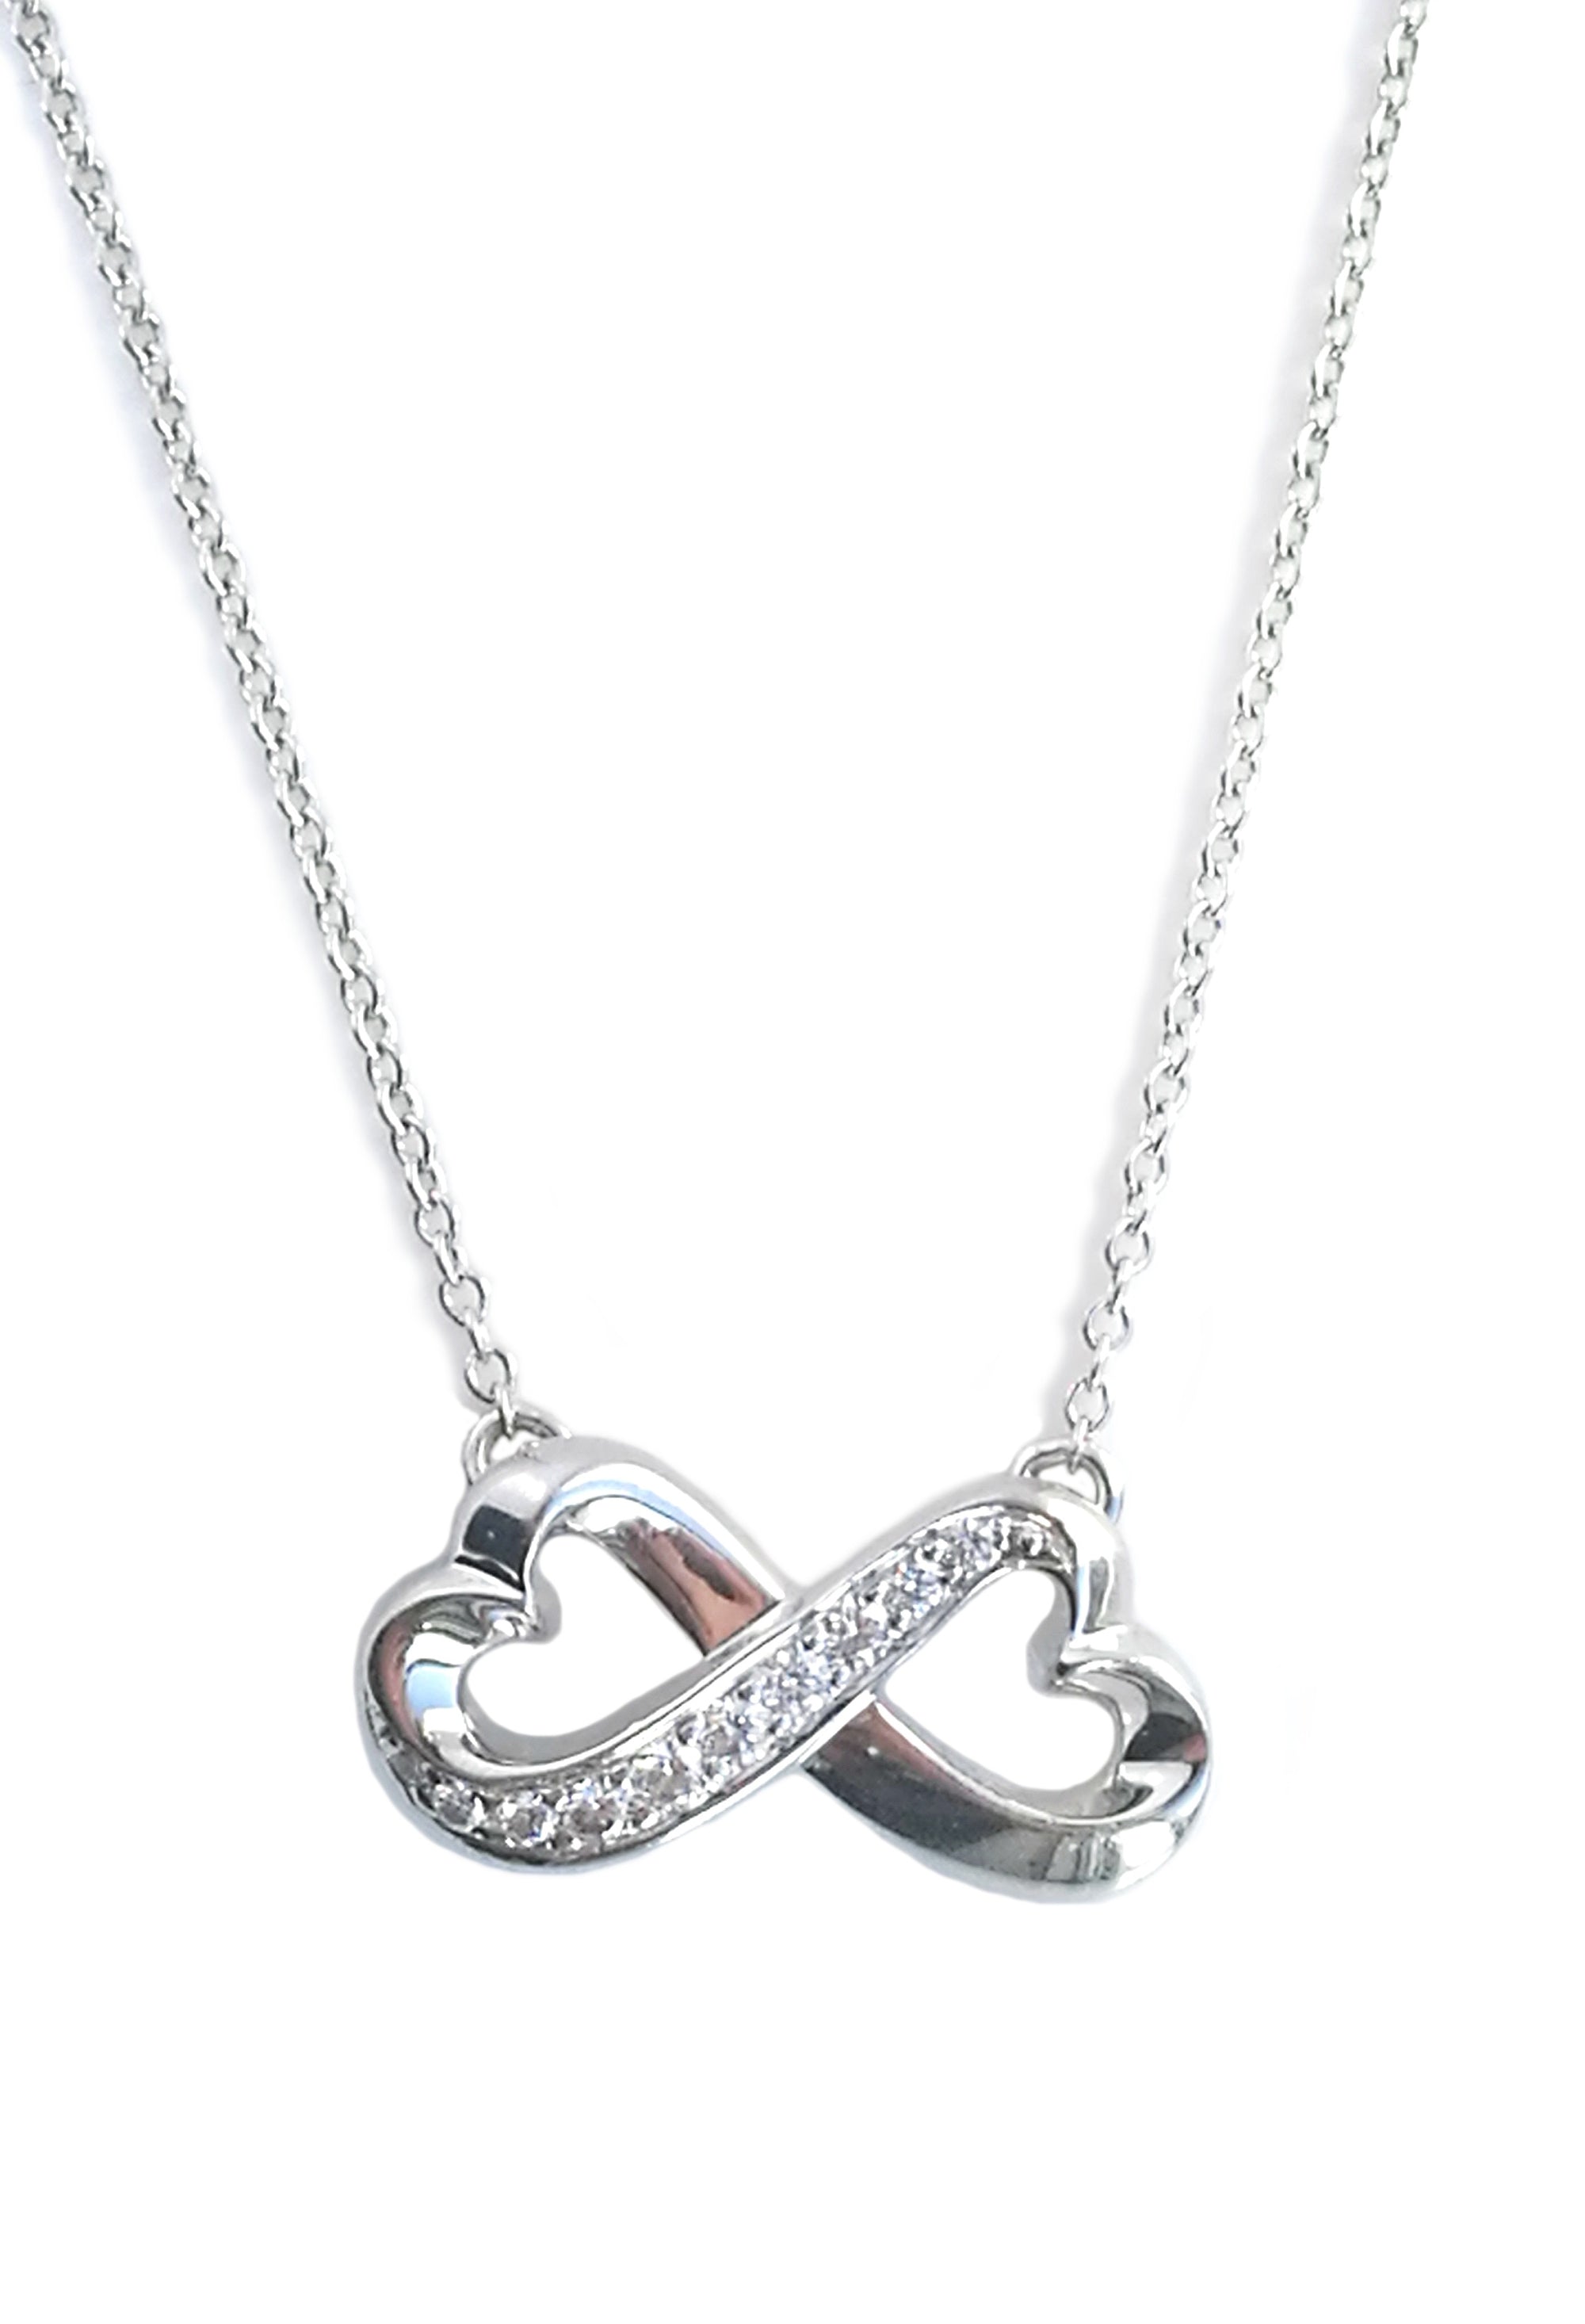 Tiffany & Co Paloma Picasso 18k White Gold Double Diamond Loving Hearts Necklace